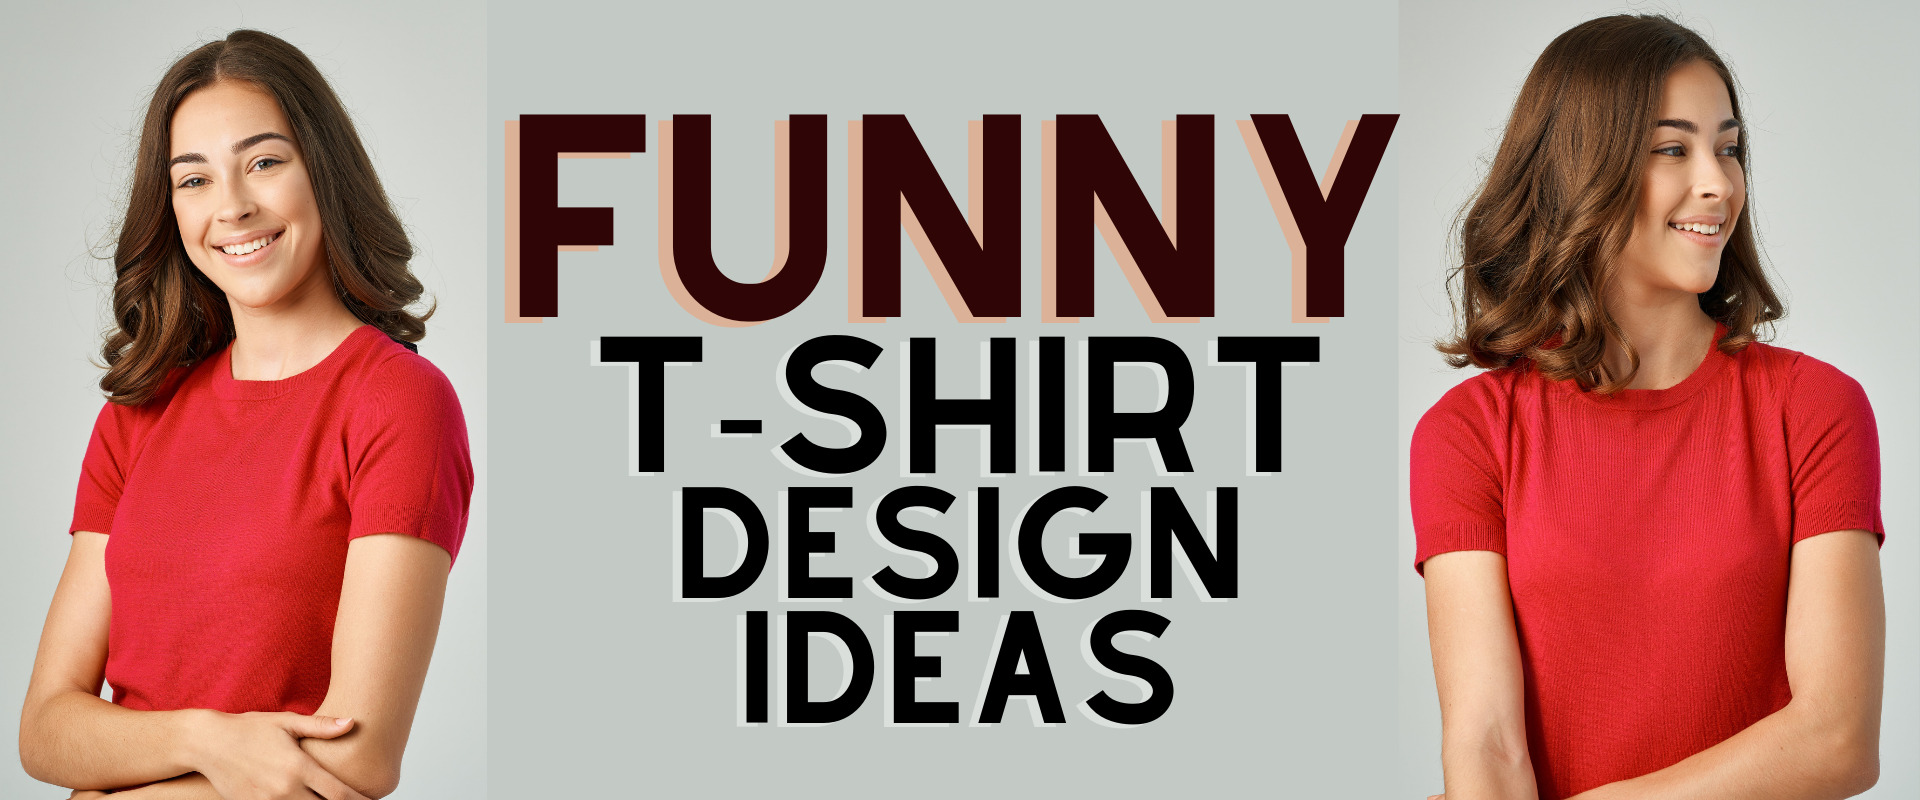 funny t-shirt design ideas